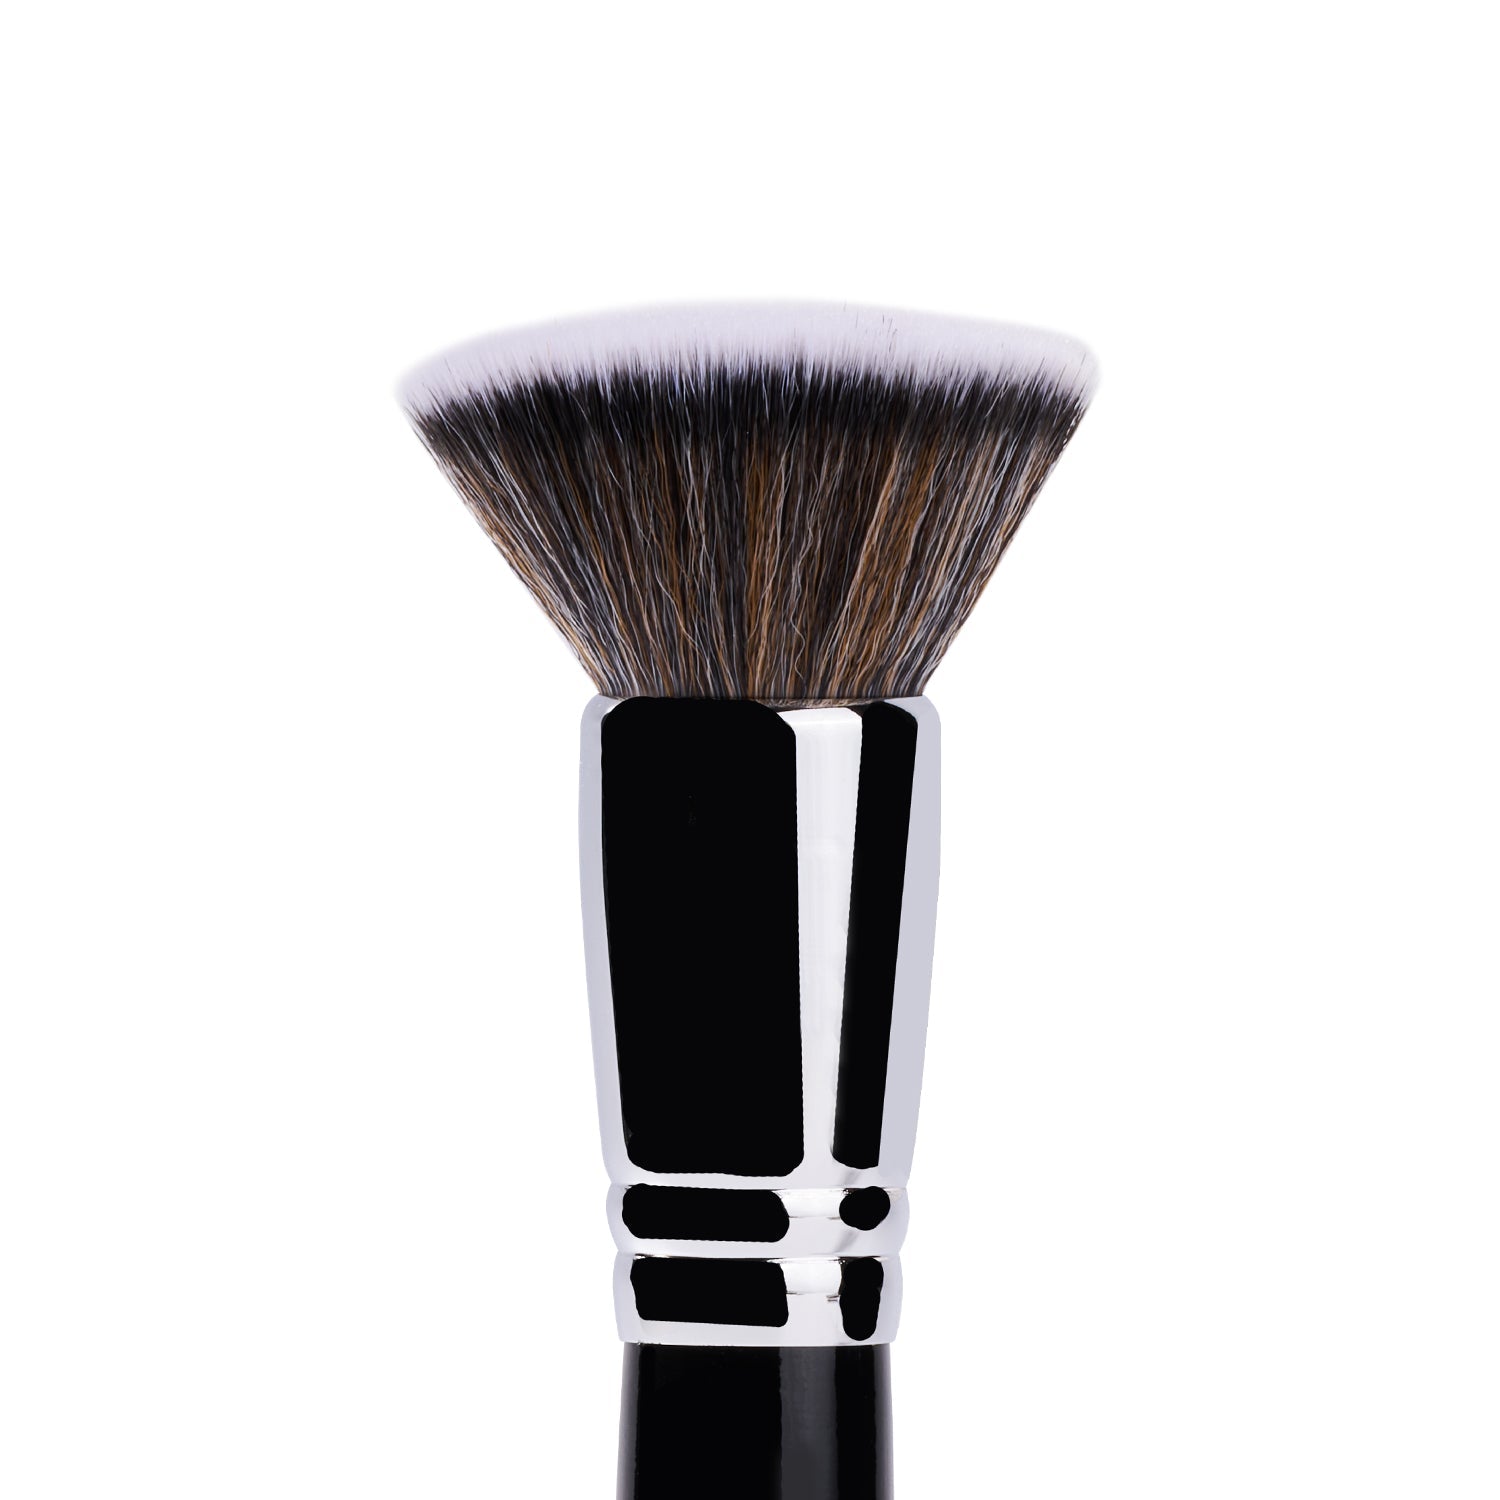 PAC Cosmetics Foundation Blending Brush 257